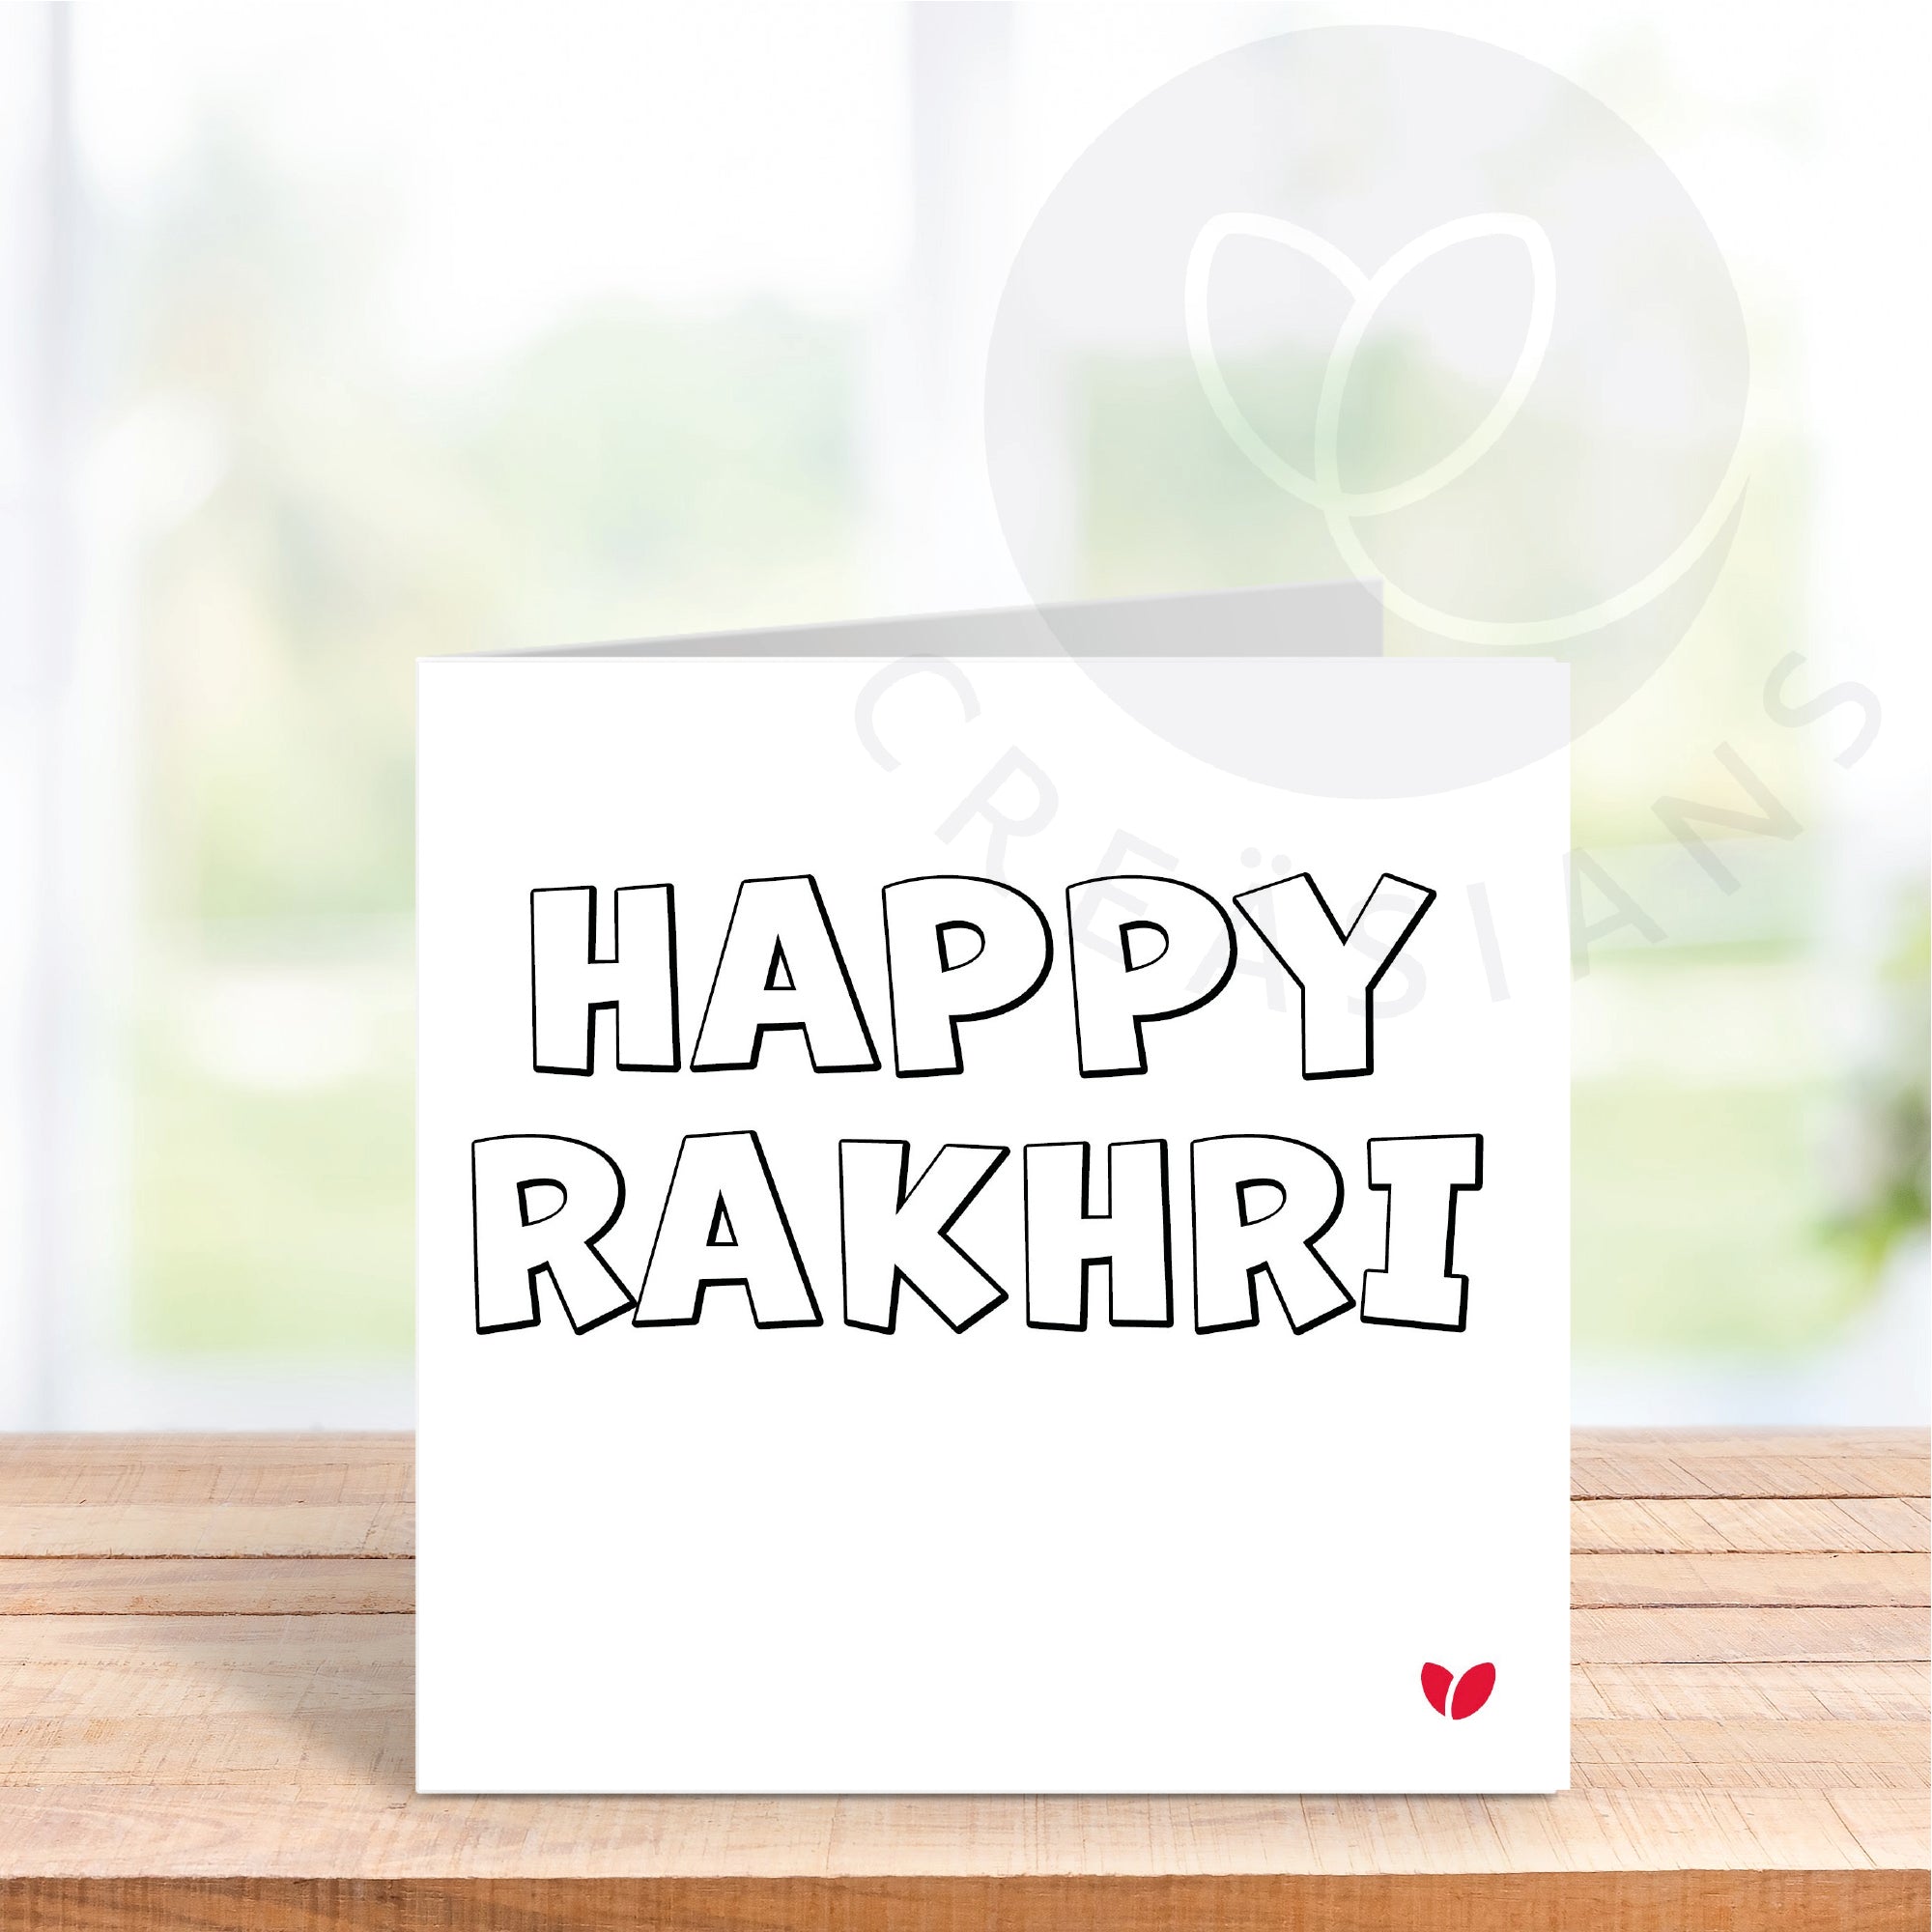 Rakhri card- colour in card - greeting card